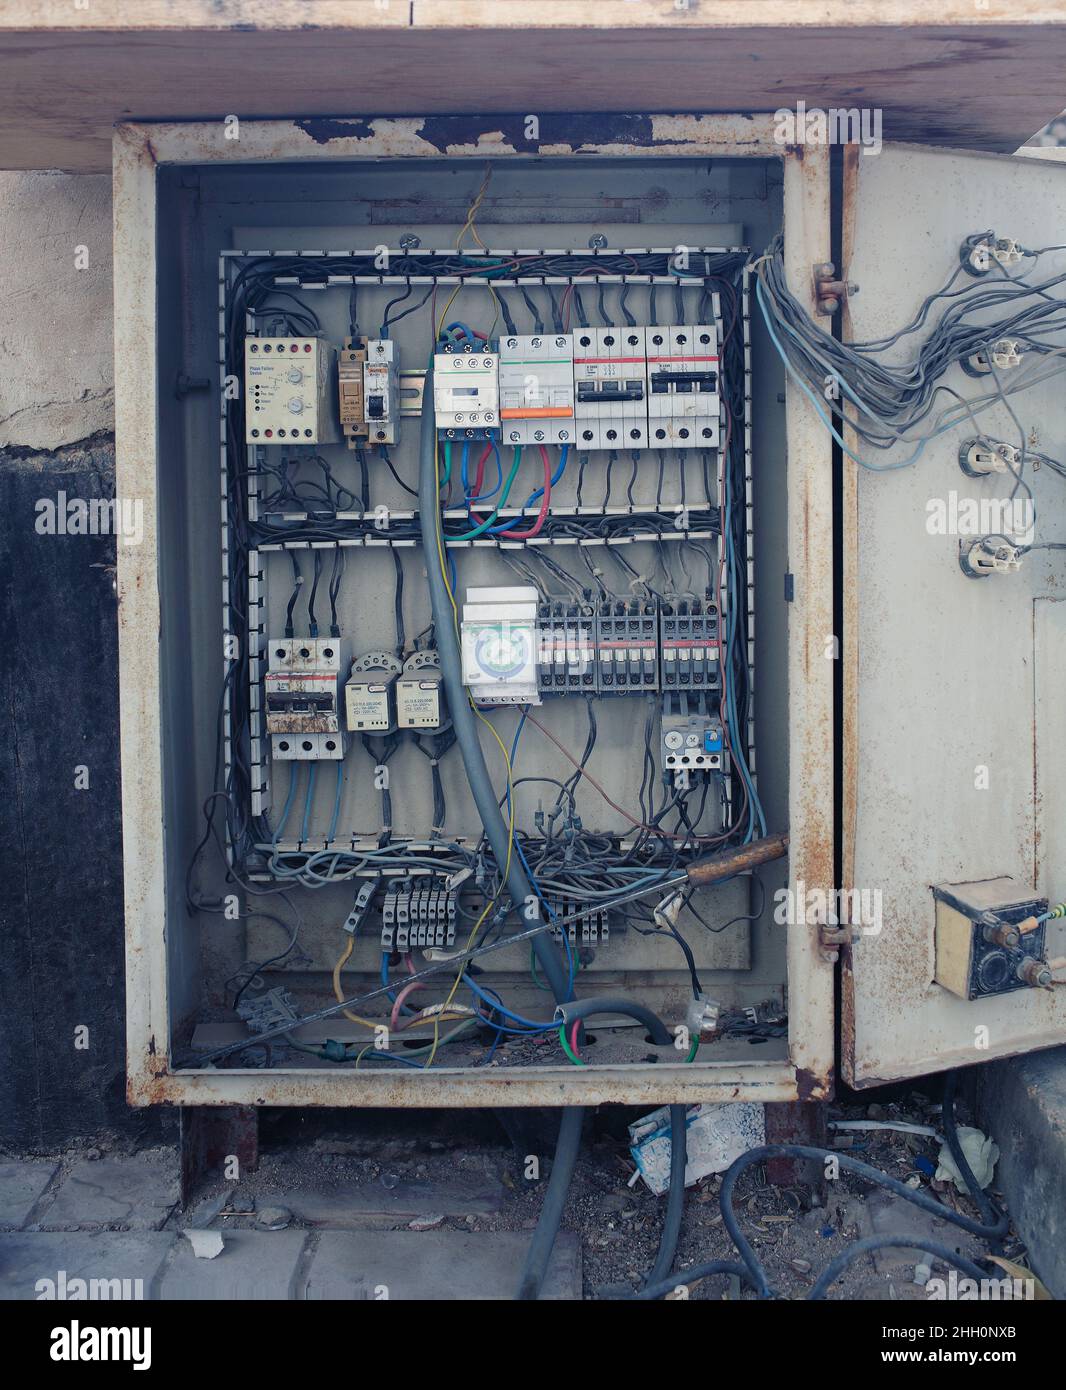 https://c8.alamy.com/comp/2HH0NXB/an-old-open-electrical-control-panel-box-2HH0NXB.jpg